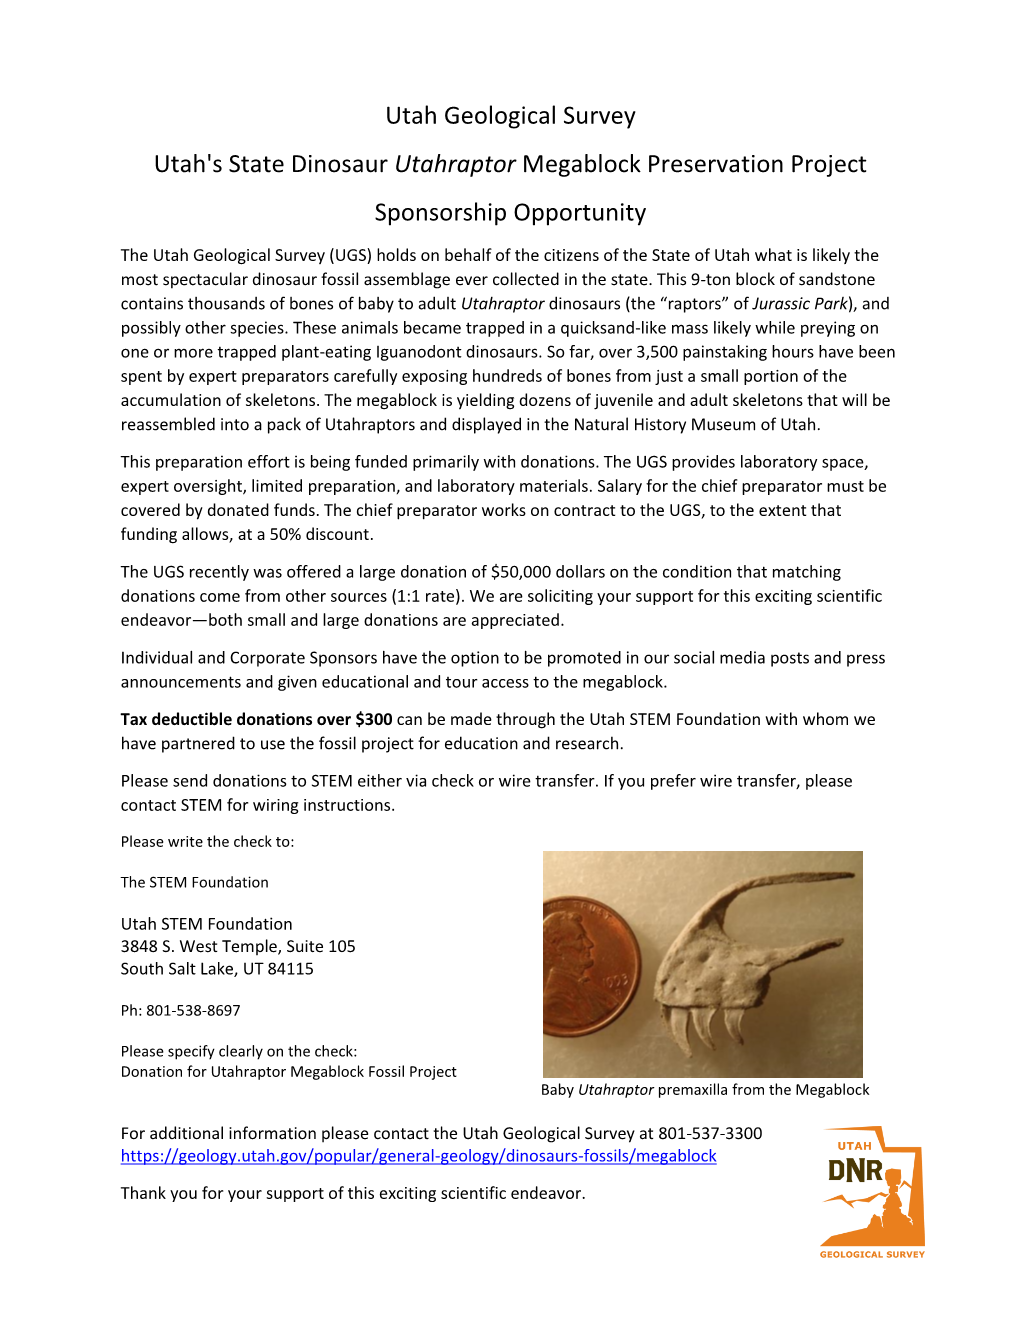 Utah Geological Survey Utah's State Dinosaur Utahraptor Megablock Preservation Project Sponsorship Opportunity